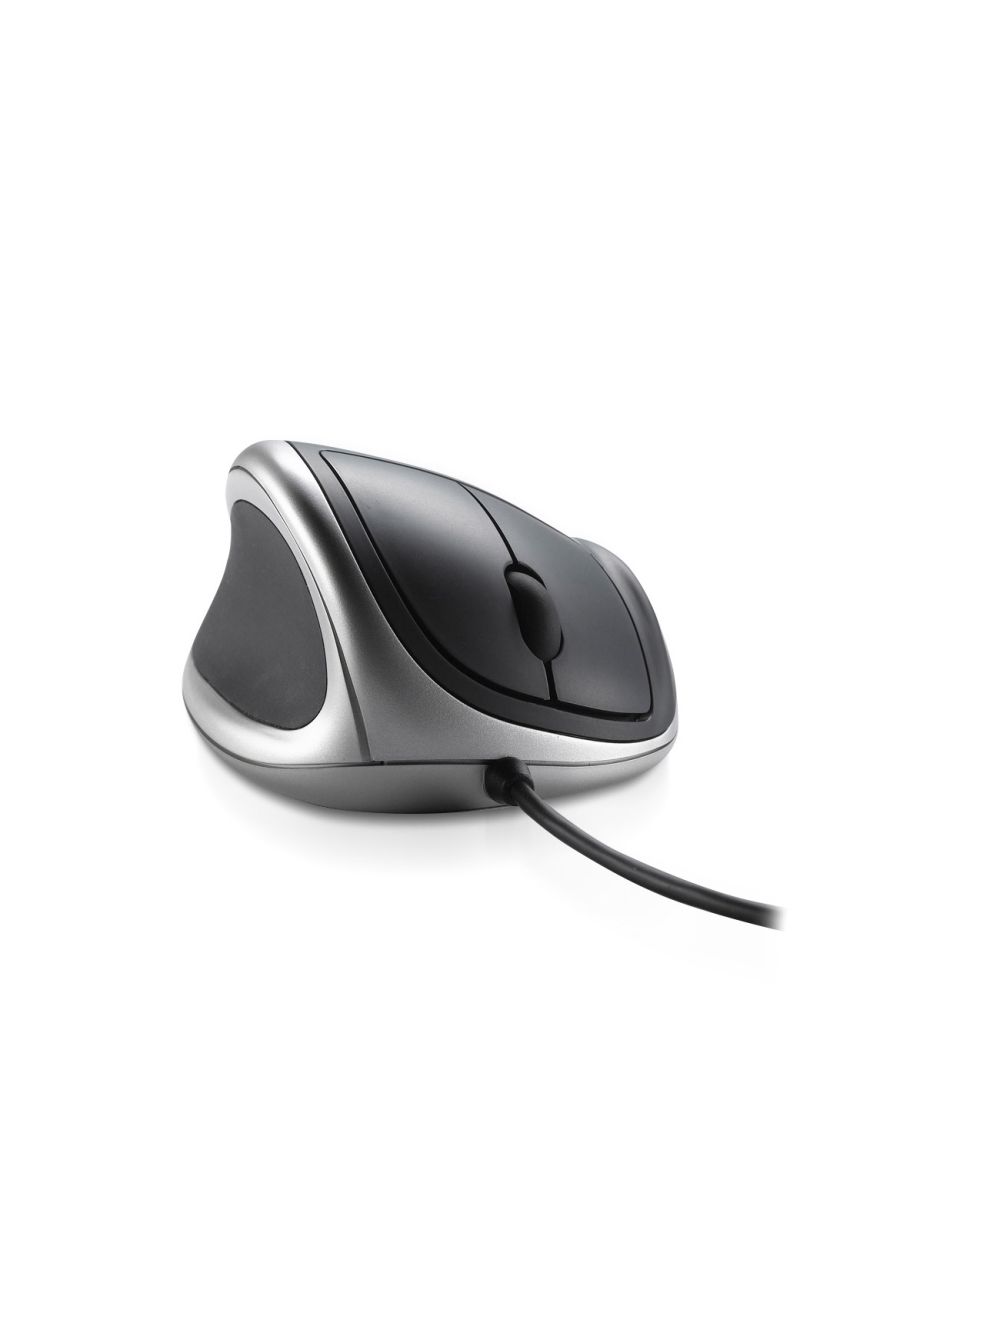 Goldtouch Comfort-fit™ Mouse v2.0 USB